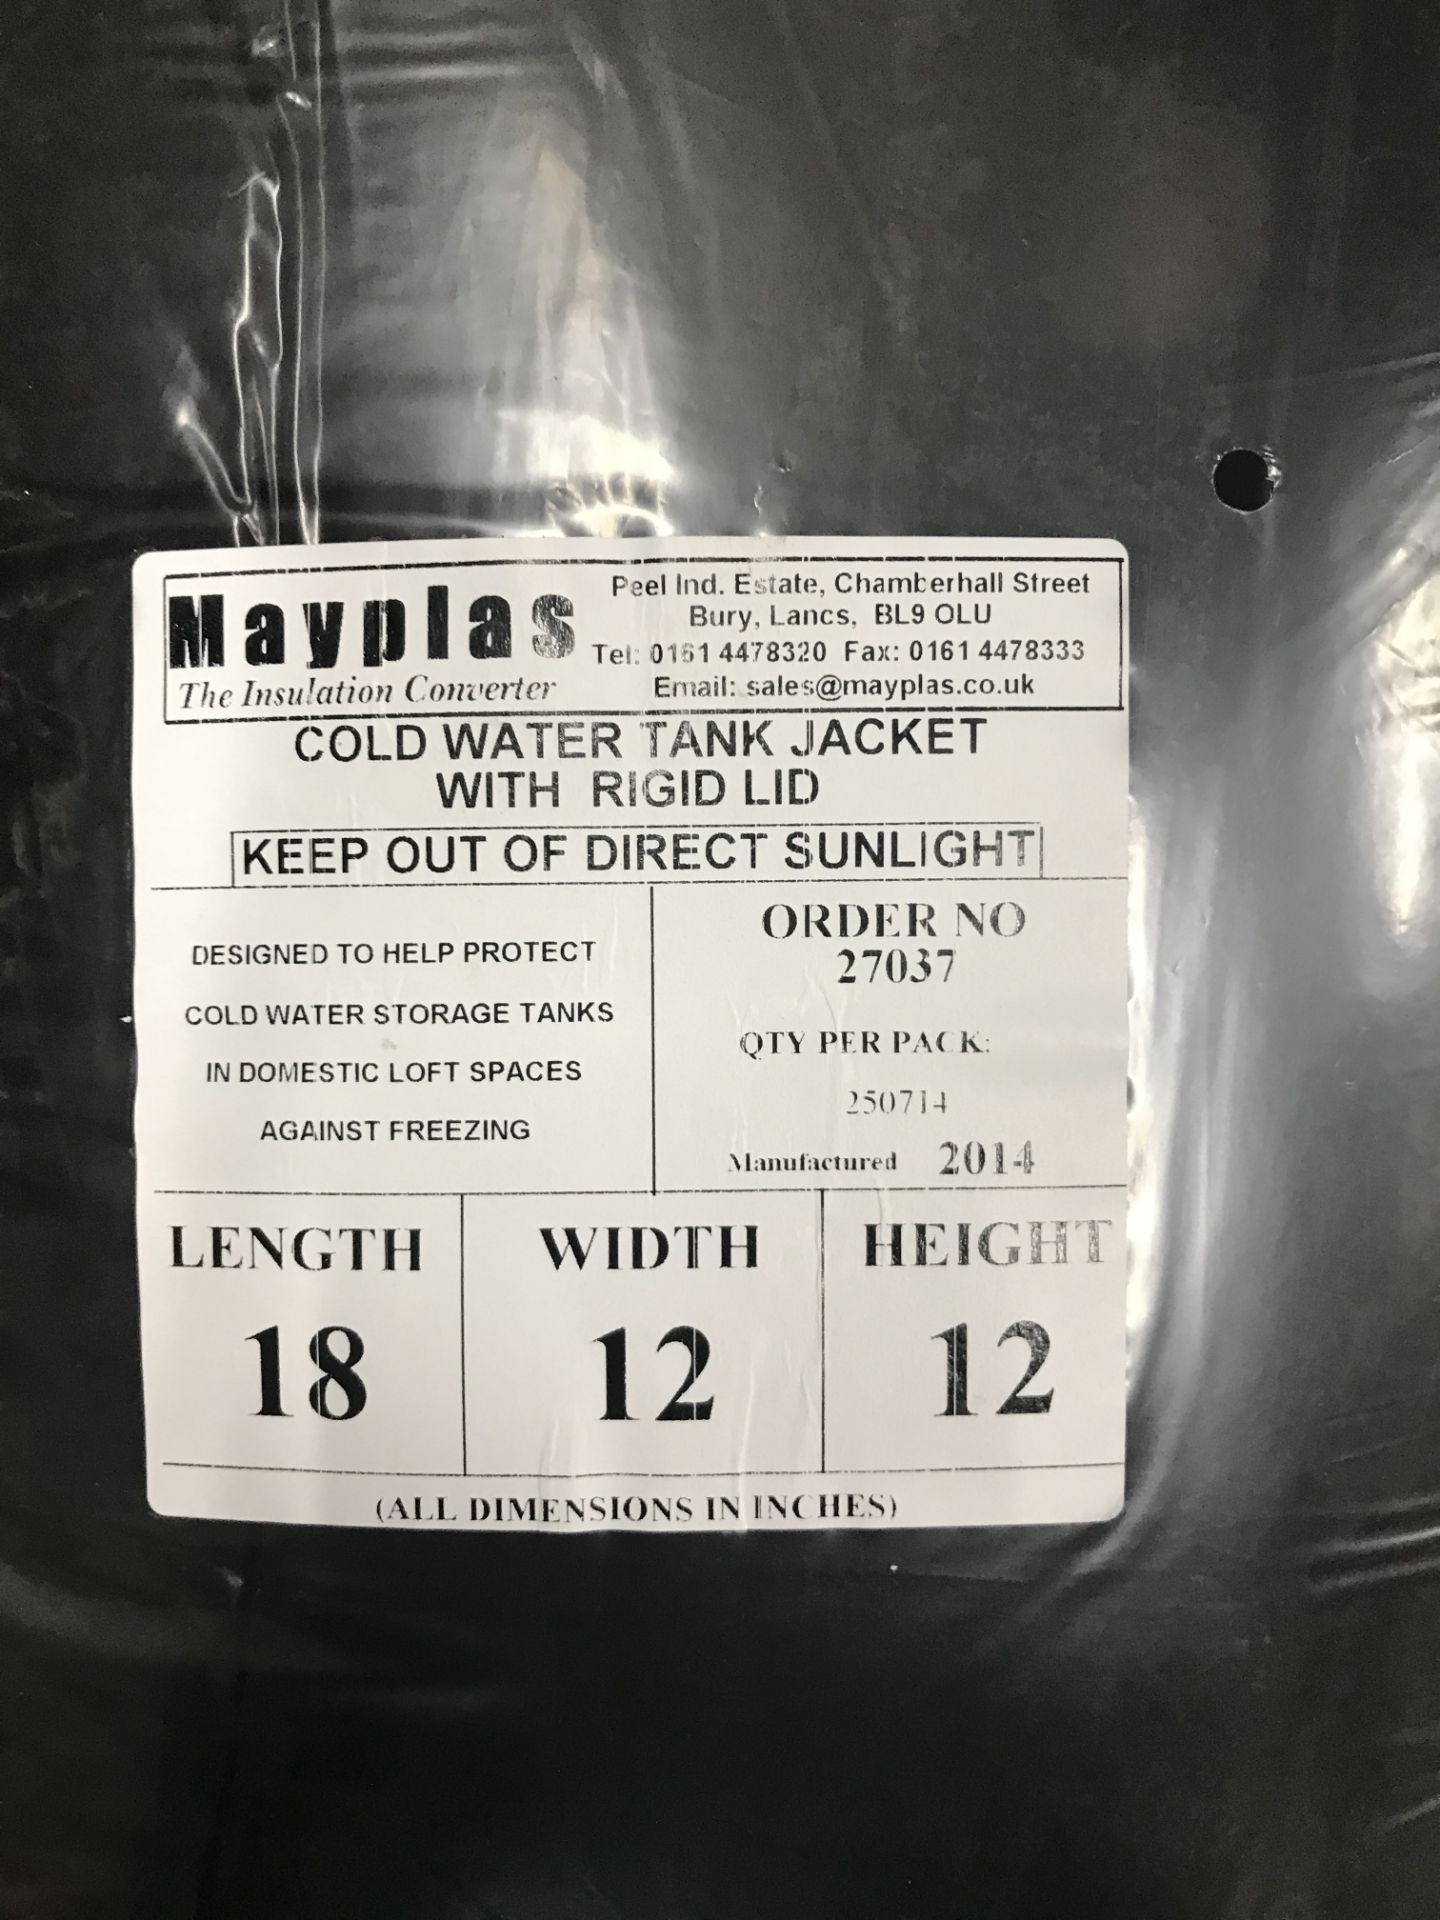 18 x Rigid Lid Boiler Jackets - 18" x 12" x 12" - Image 2 of 2